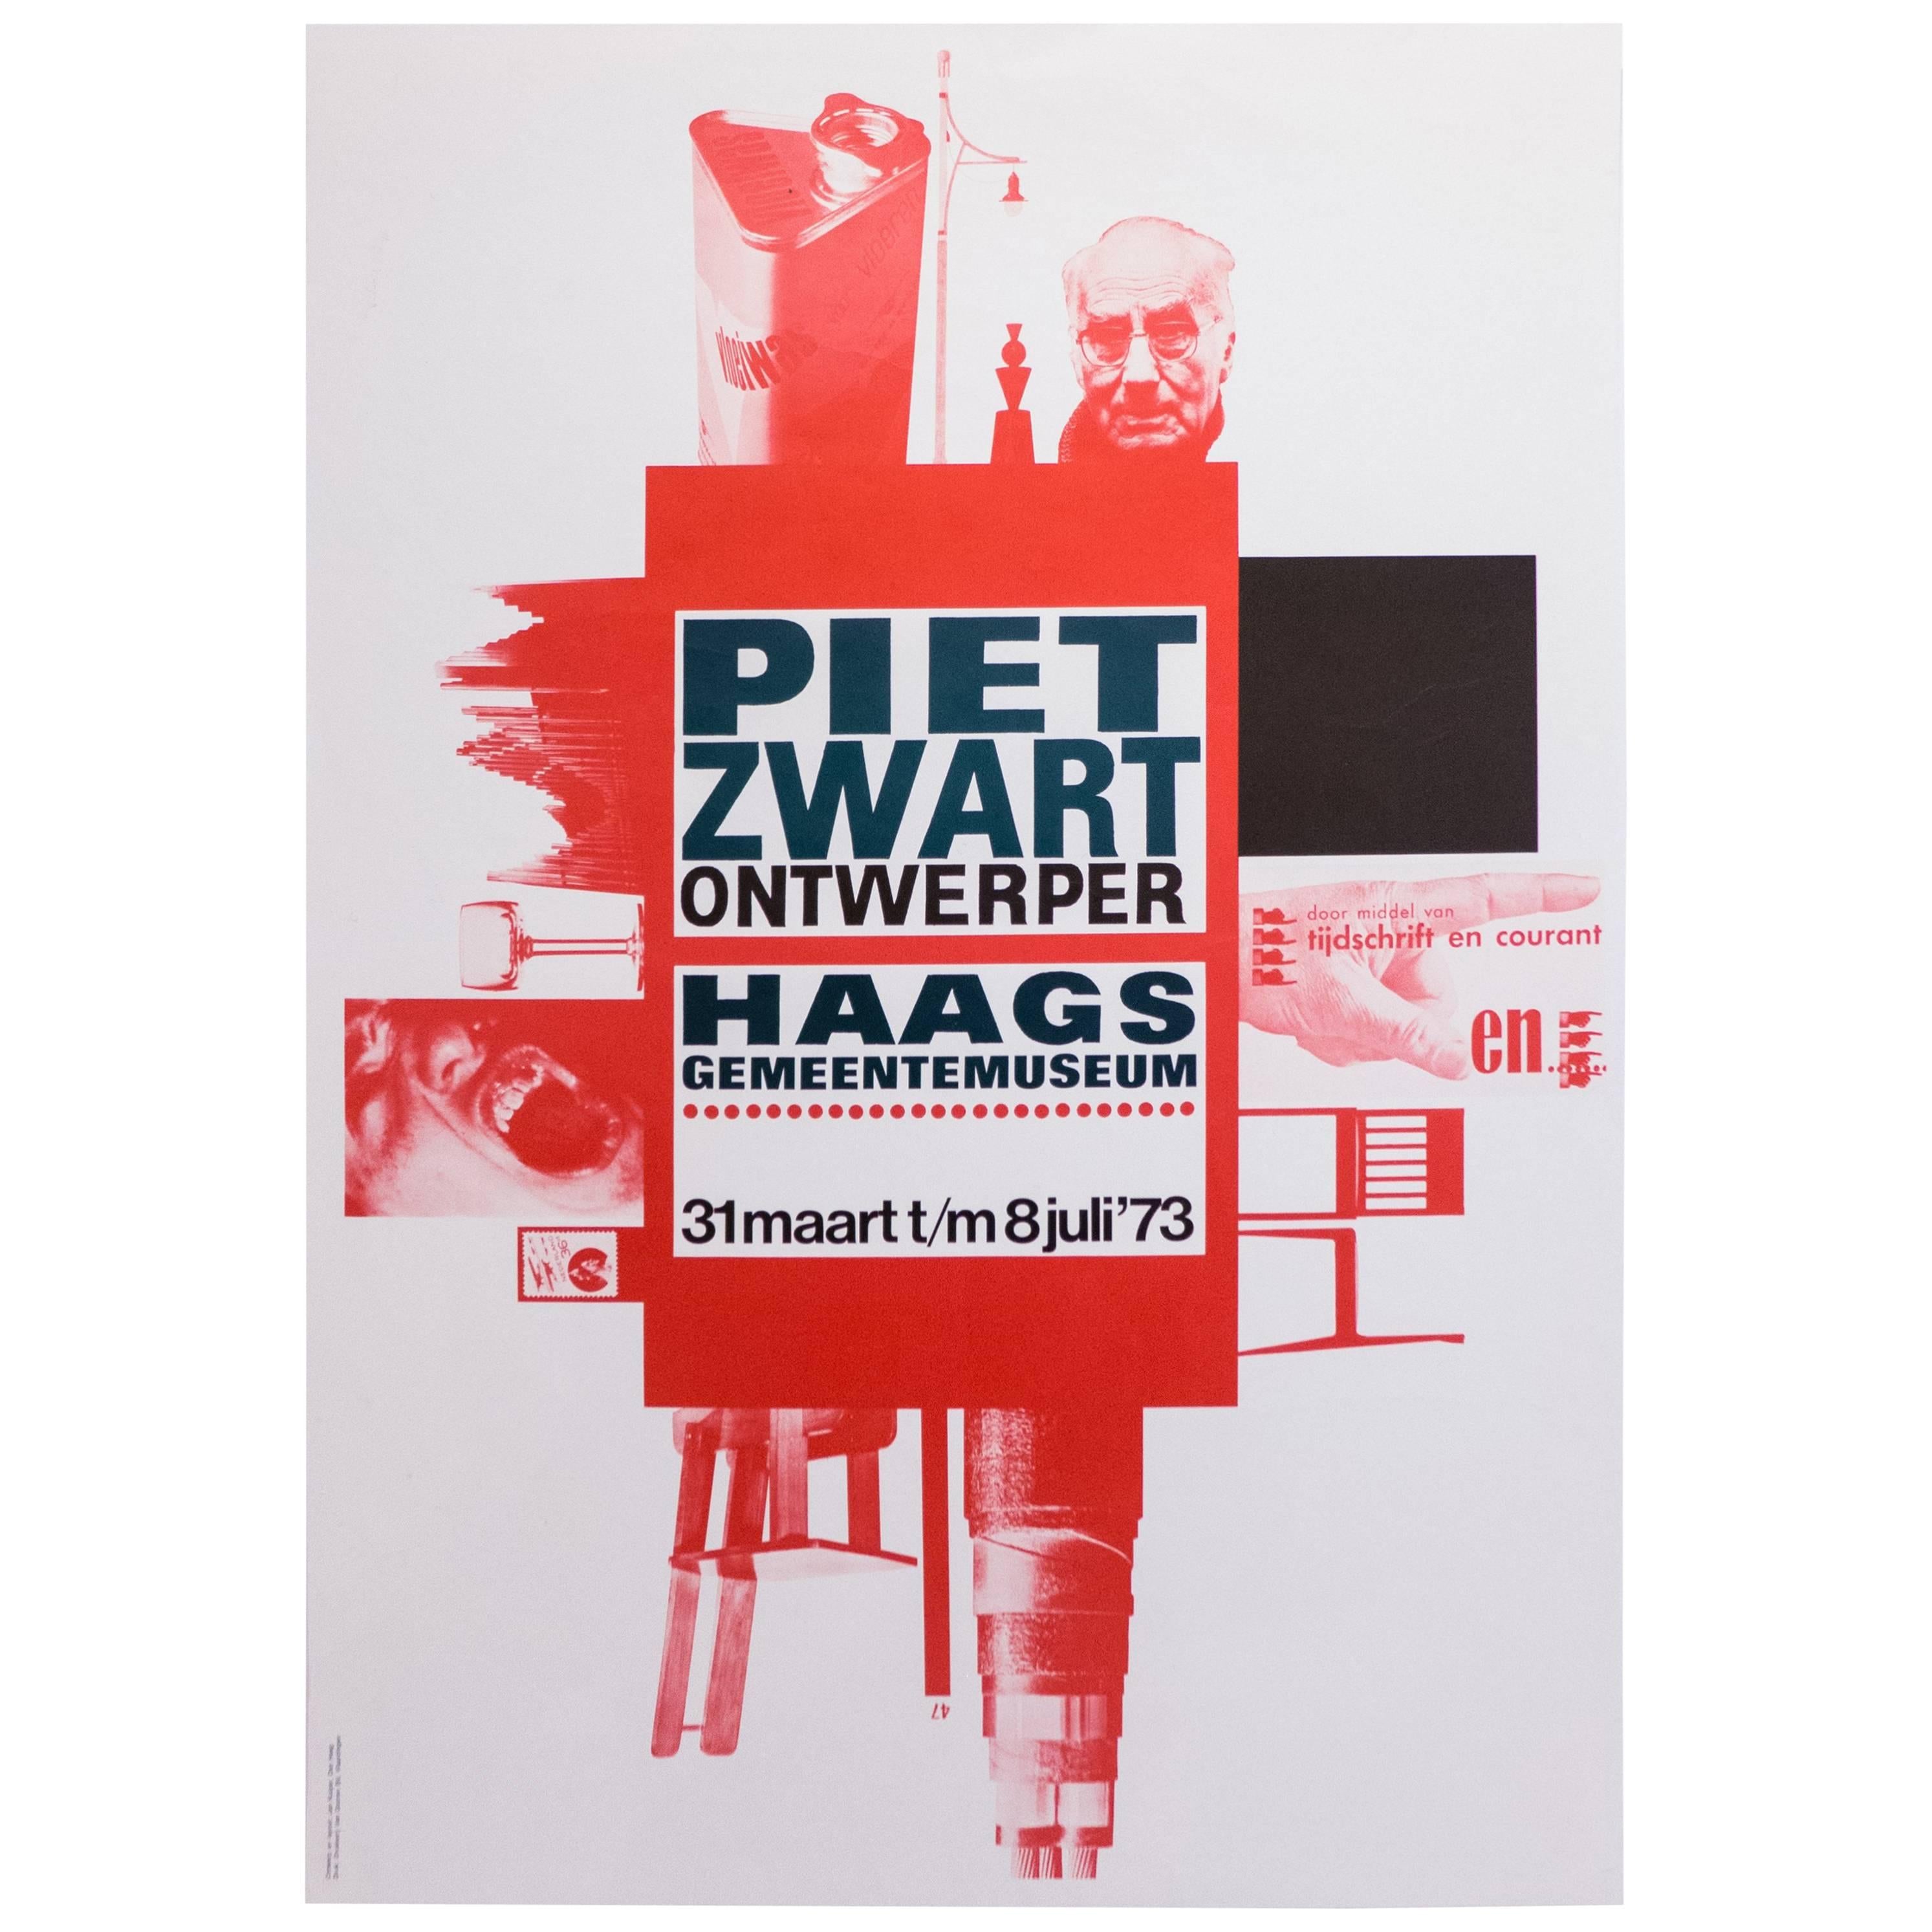 Affiche d'une exposition de Piet Zwart